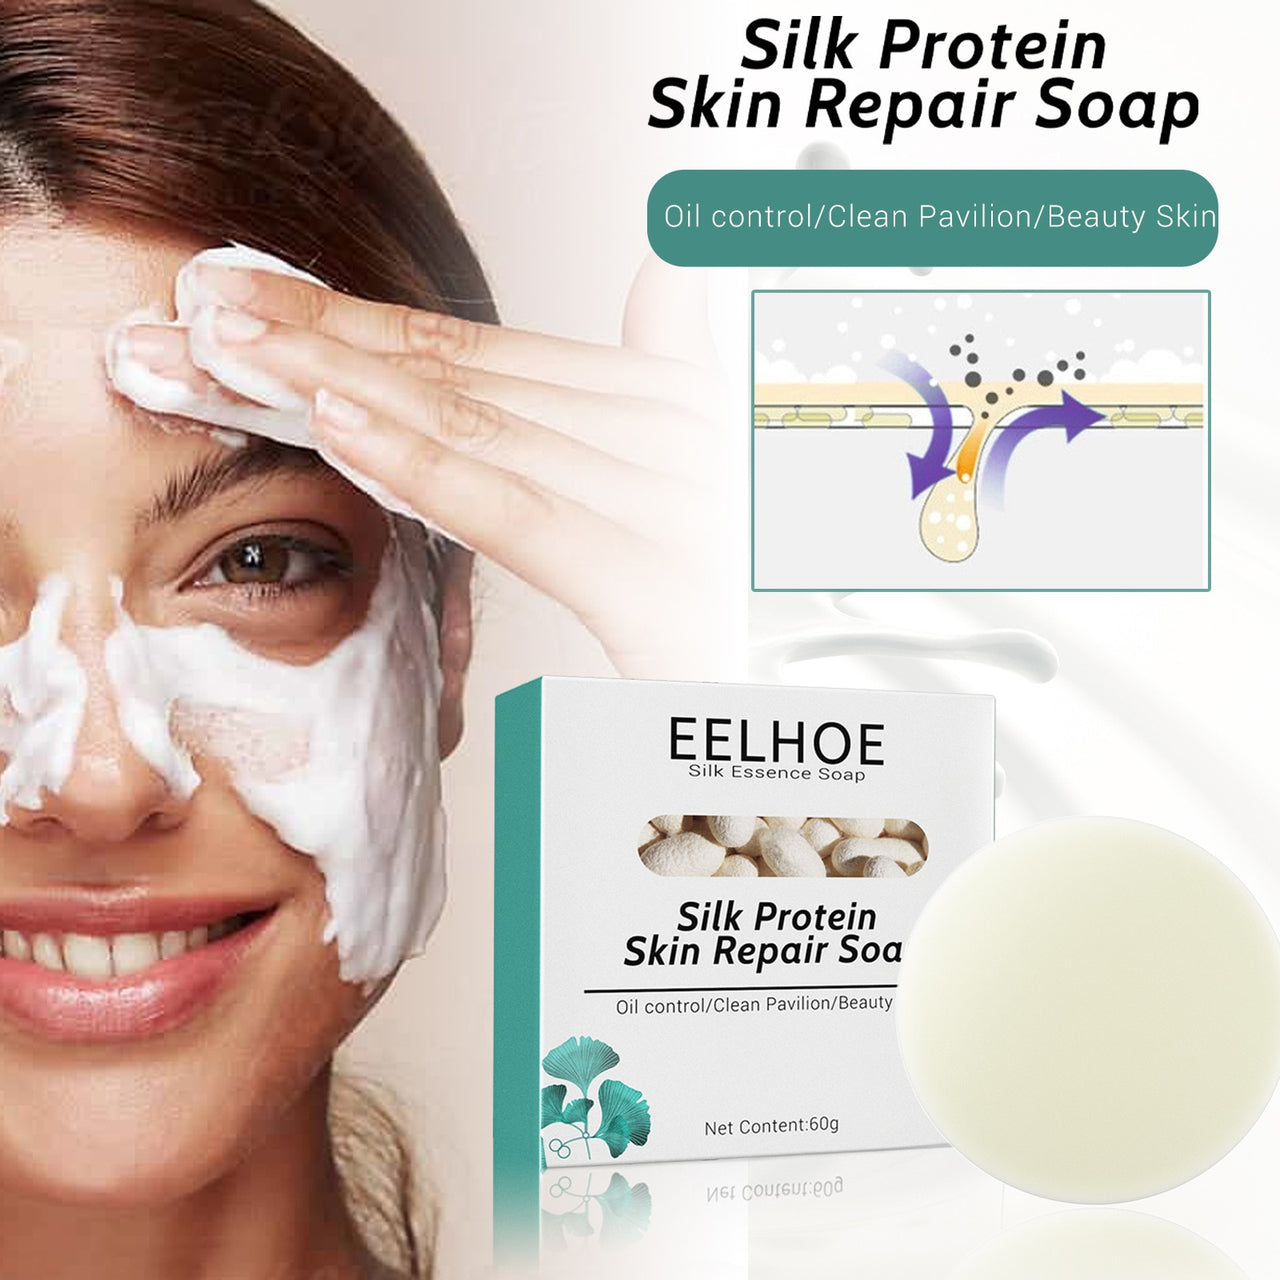 EELHOE™ Silk Protein Skin Repair Soap - thedealzninja